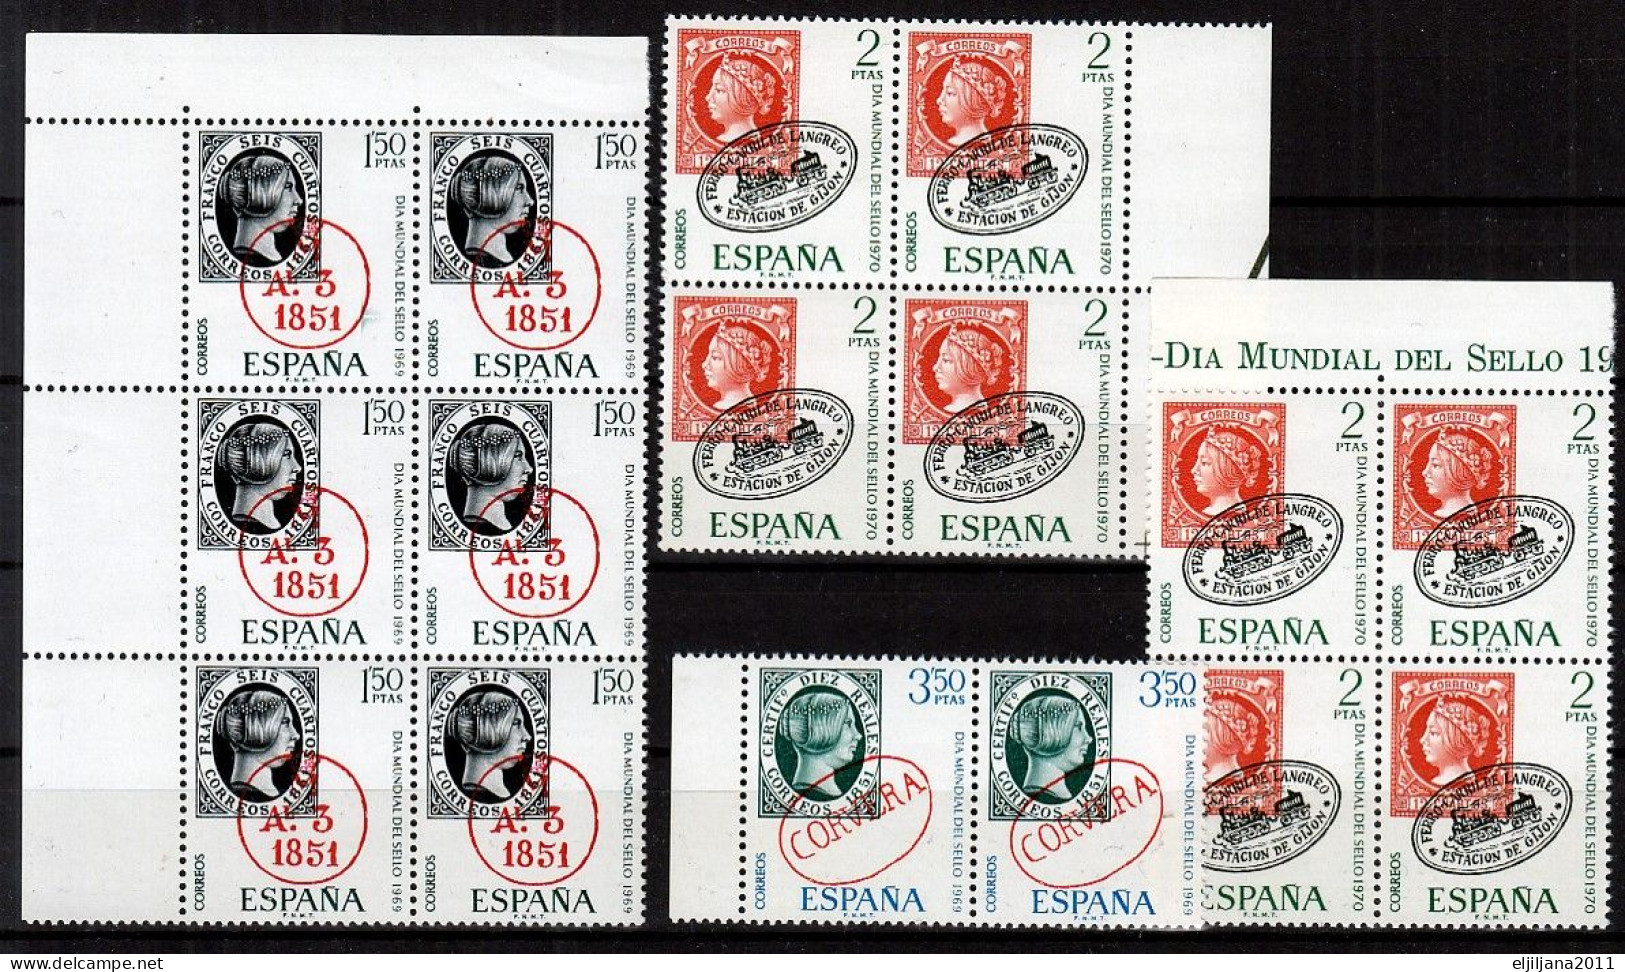 ⁕ SPAIN / ESPANA 1969 - 1970 ⁕ World Stamp Day Mi.1809/10 & Mi.1861 ⁕ 16v MNH - Ongebruikt